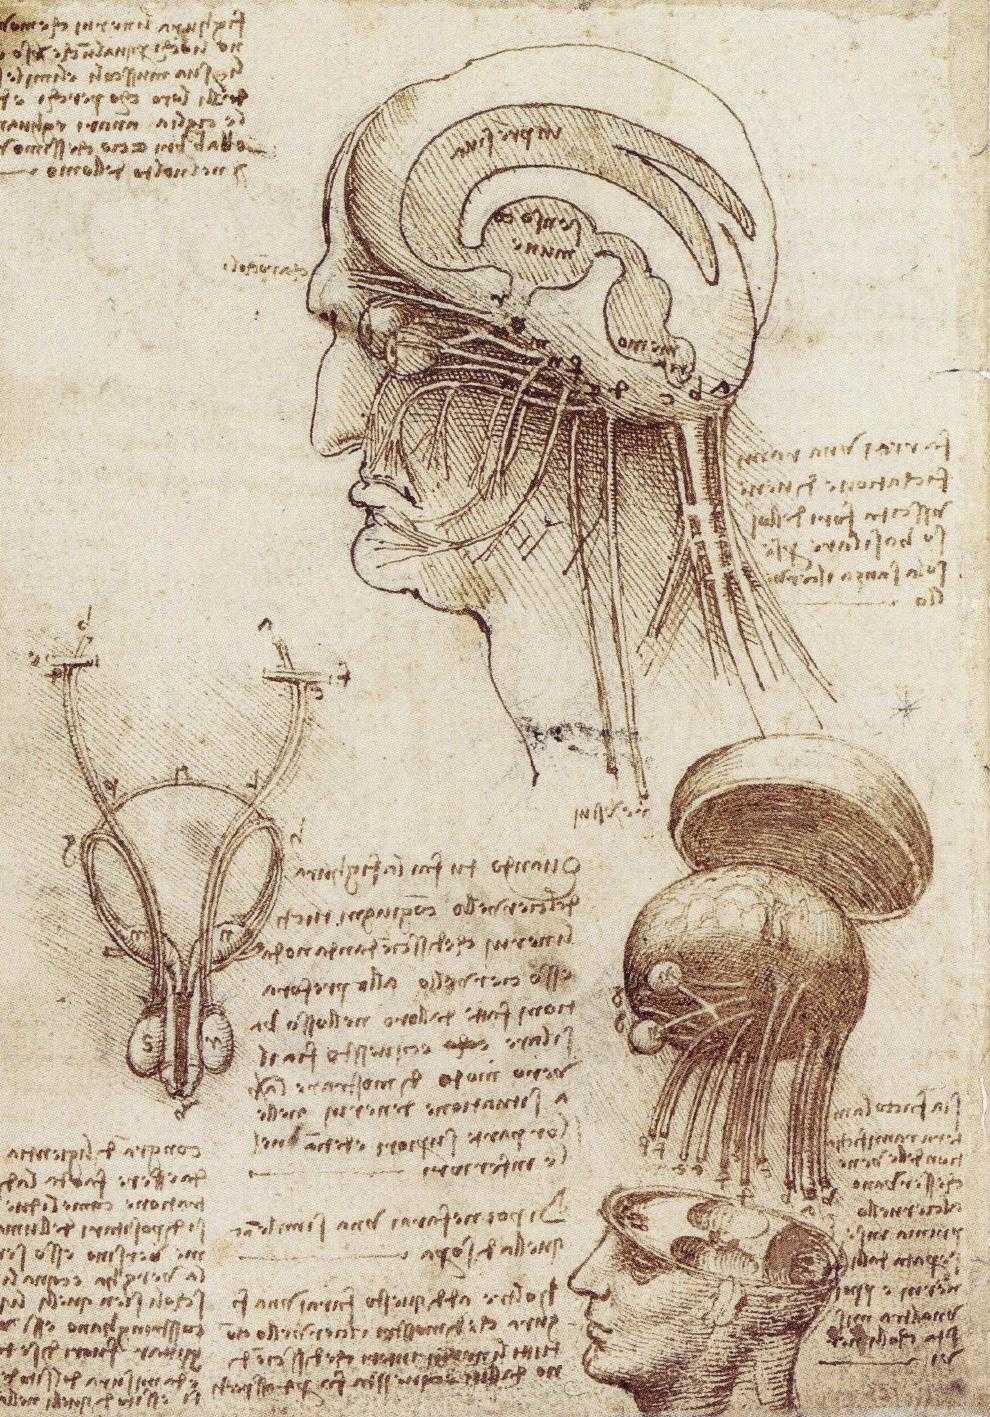 Leonardo's sketch of the human brain